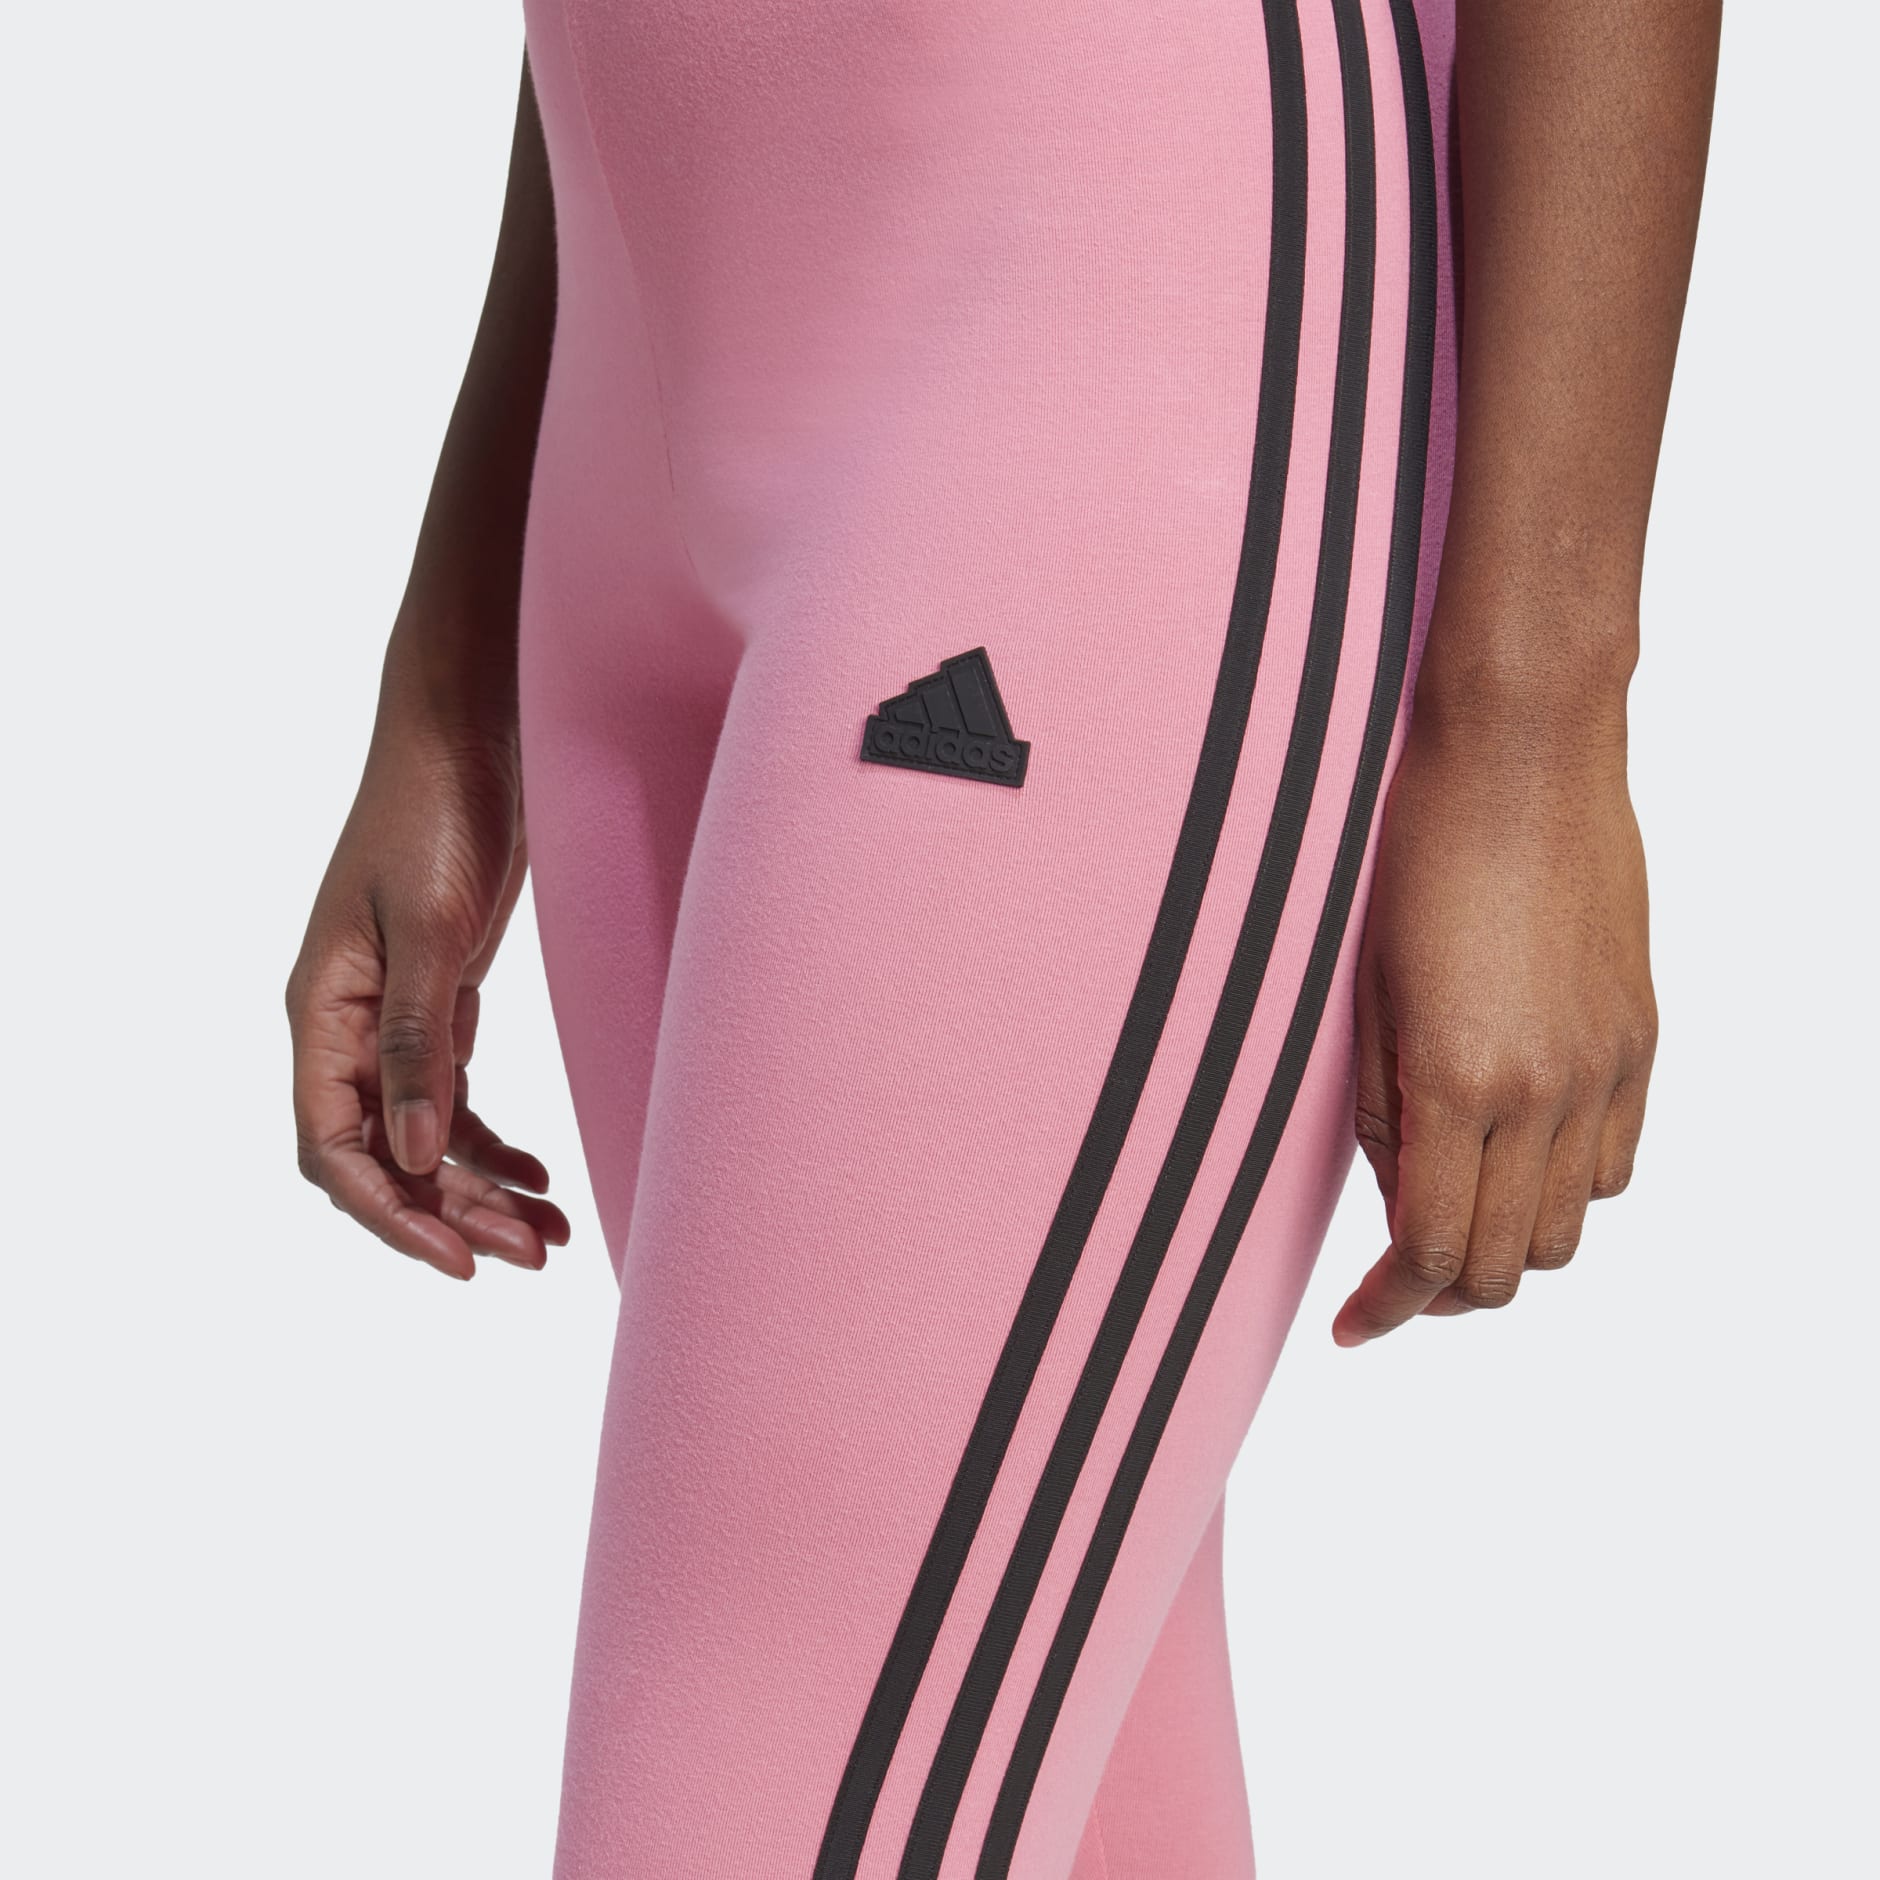 adidas Women's Leggings & Tights - Pink